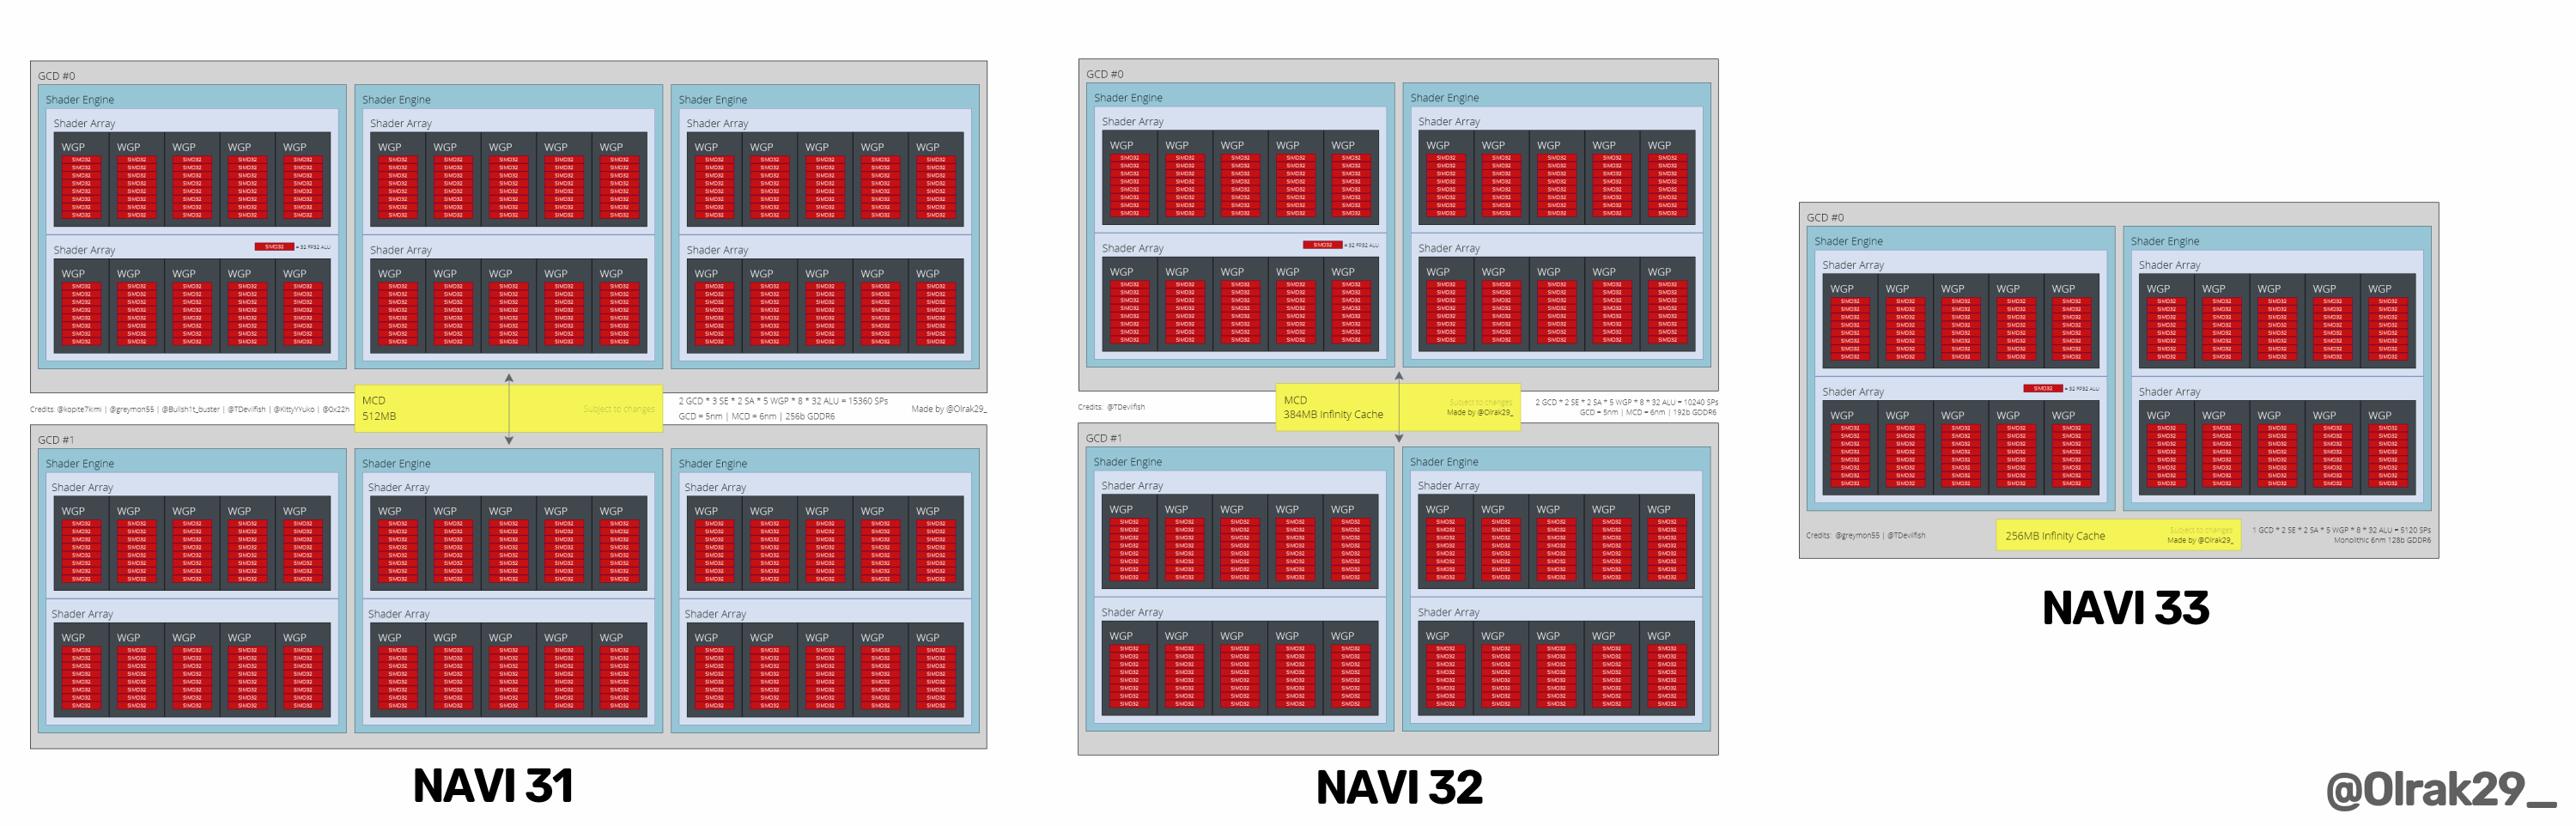 AMD-NAVI-3X-GPUs.png